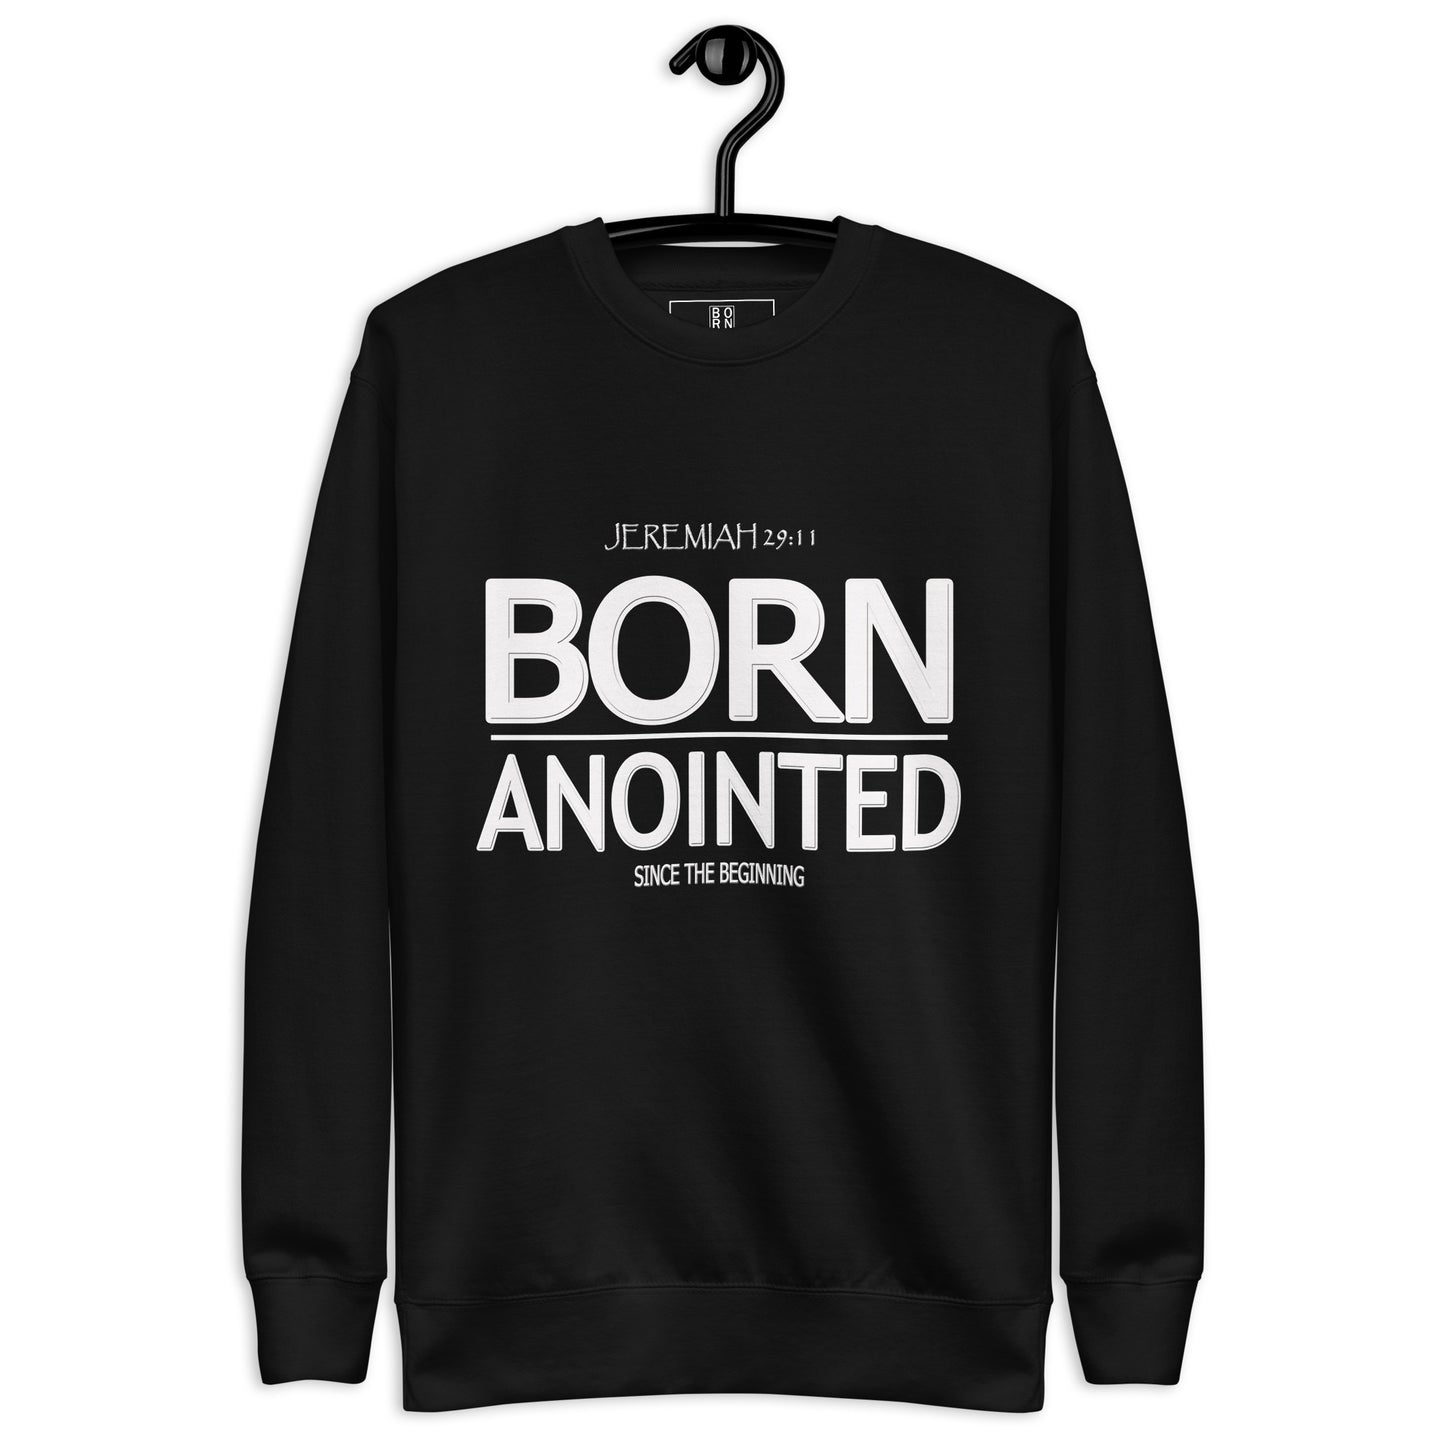 Born Anointed "Jeremiah 29:11" Unisex Premium Sweatshirt